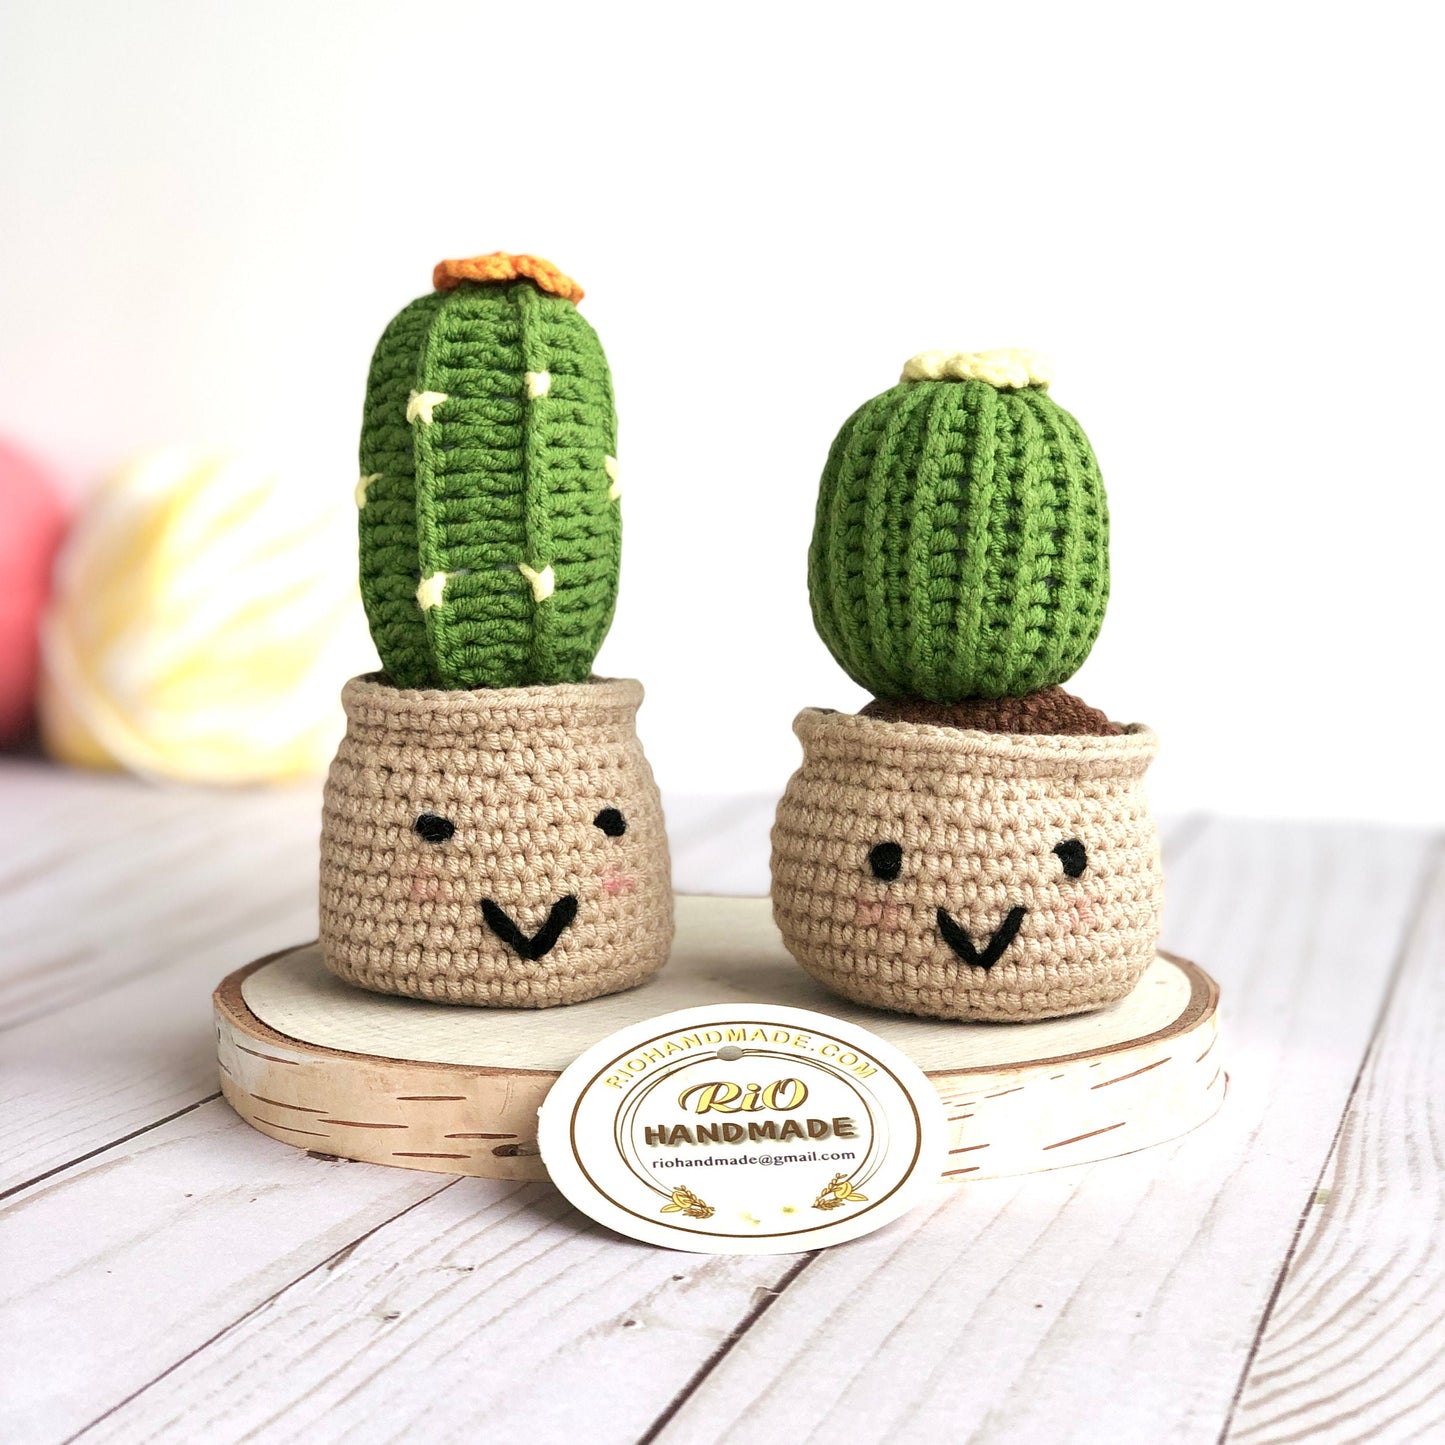 Ready To Ship, Handmade Cactus Gift, Crochet Cactus, Amigurumi Cactus, Faux Plant, Cactus Decor, Potted Cactus